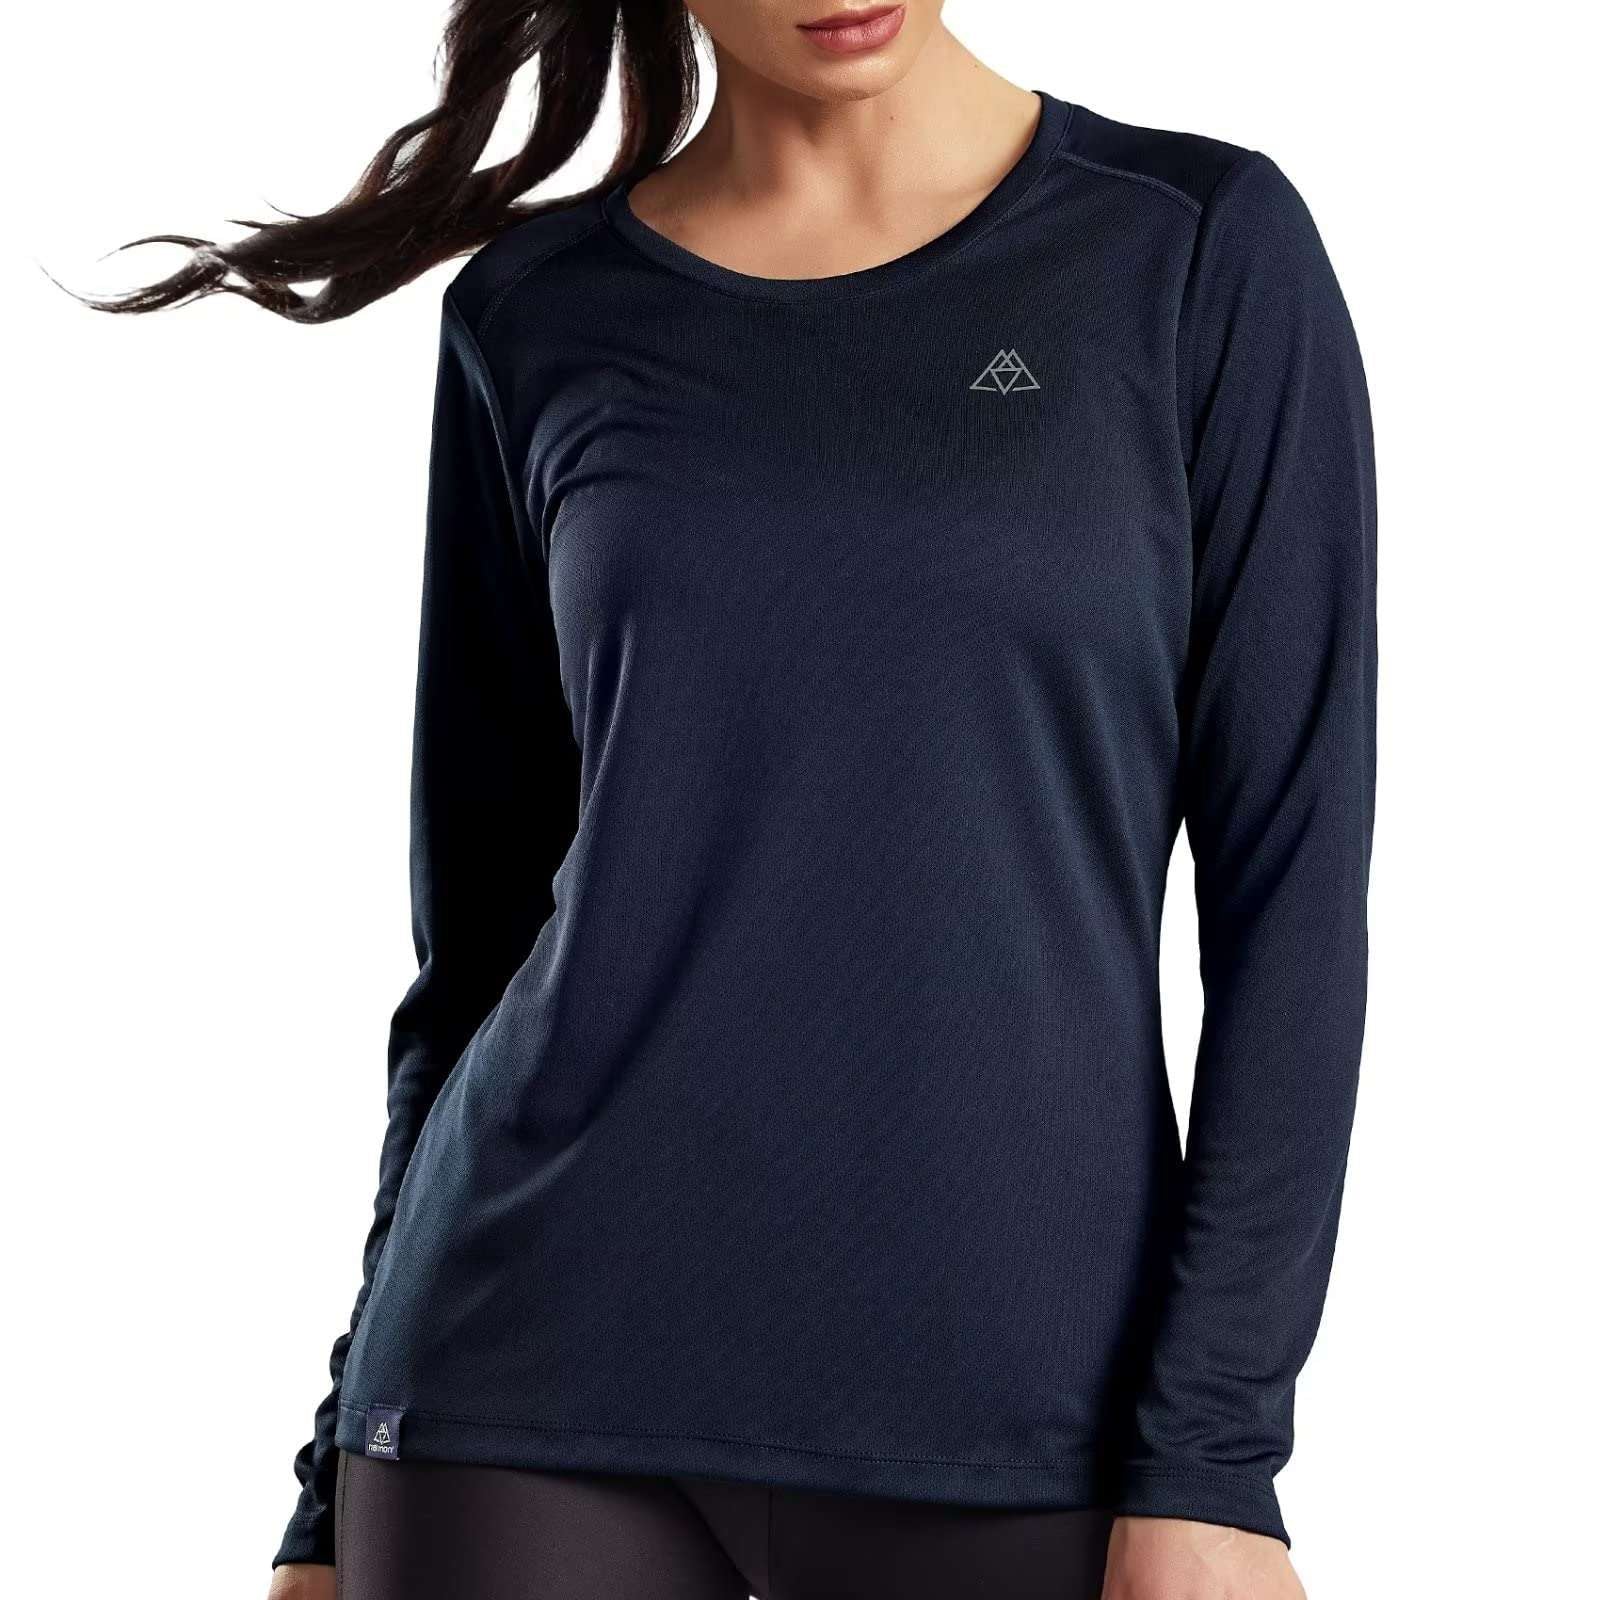 Women's Long Sleeve Workout Shirts in Blue